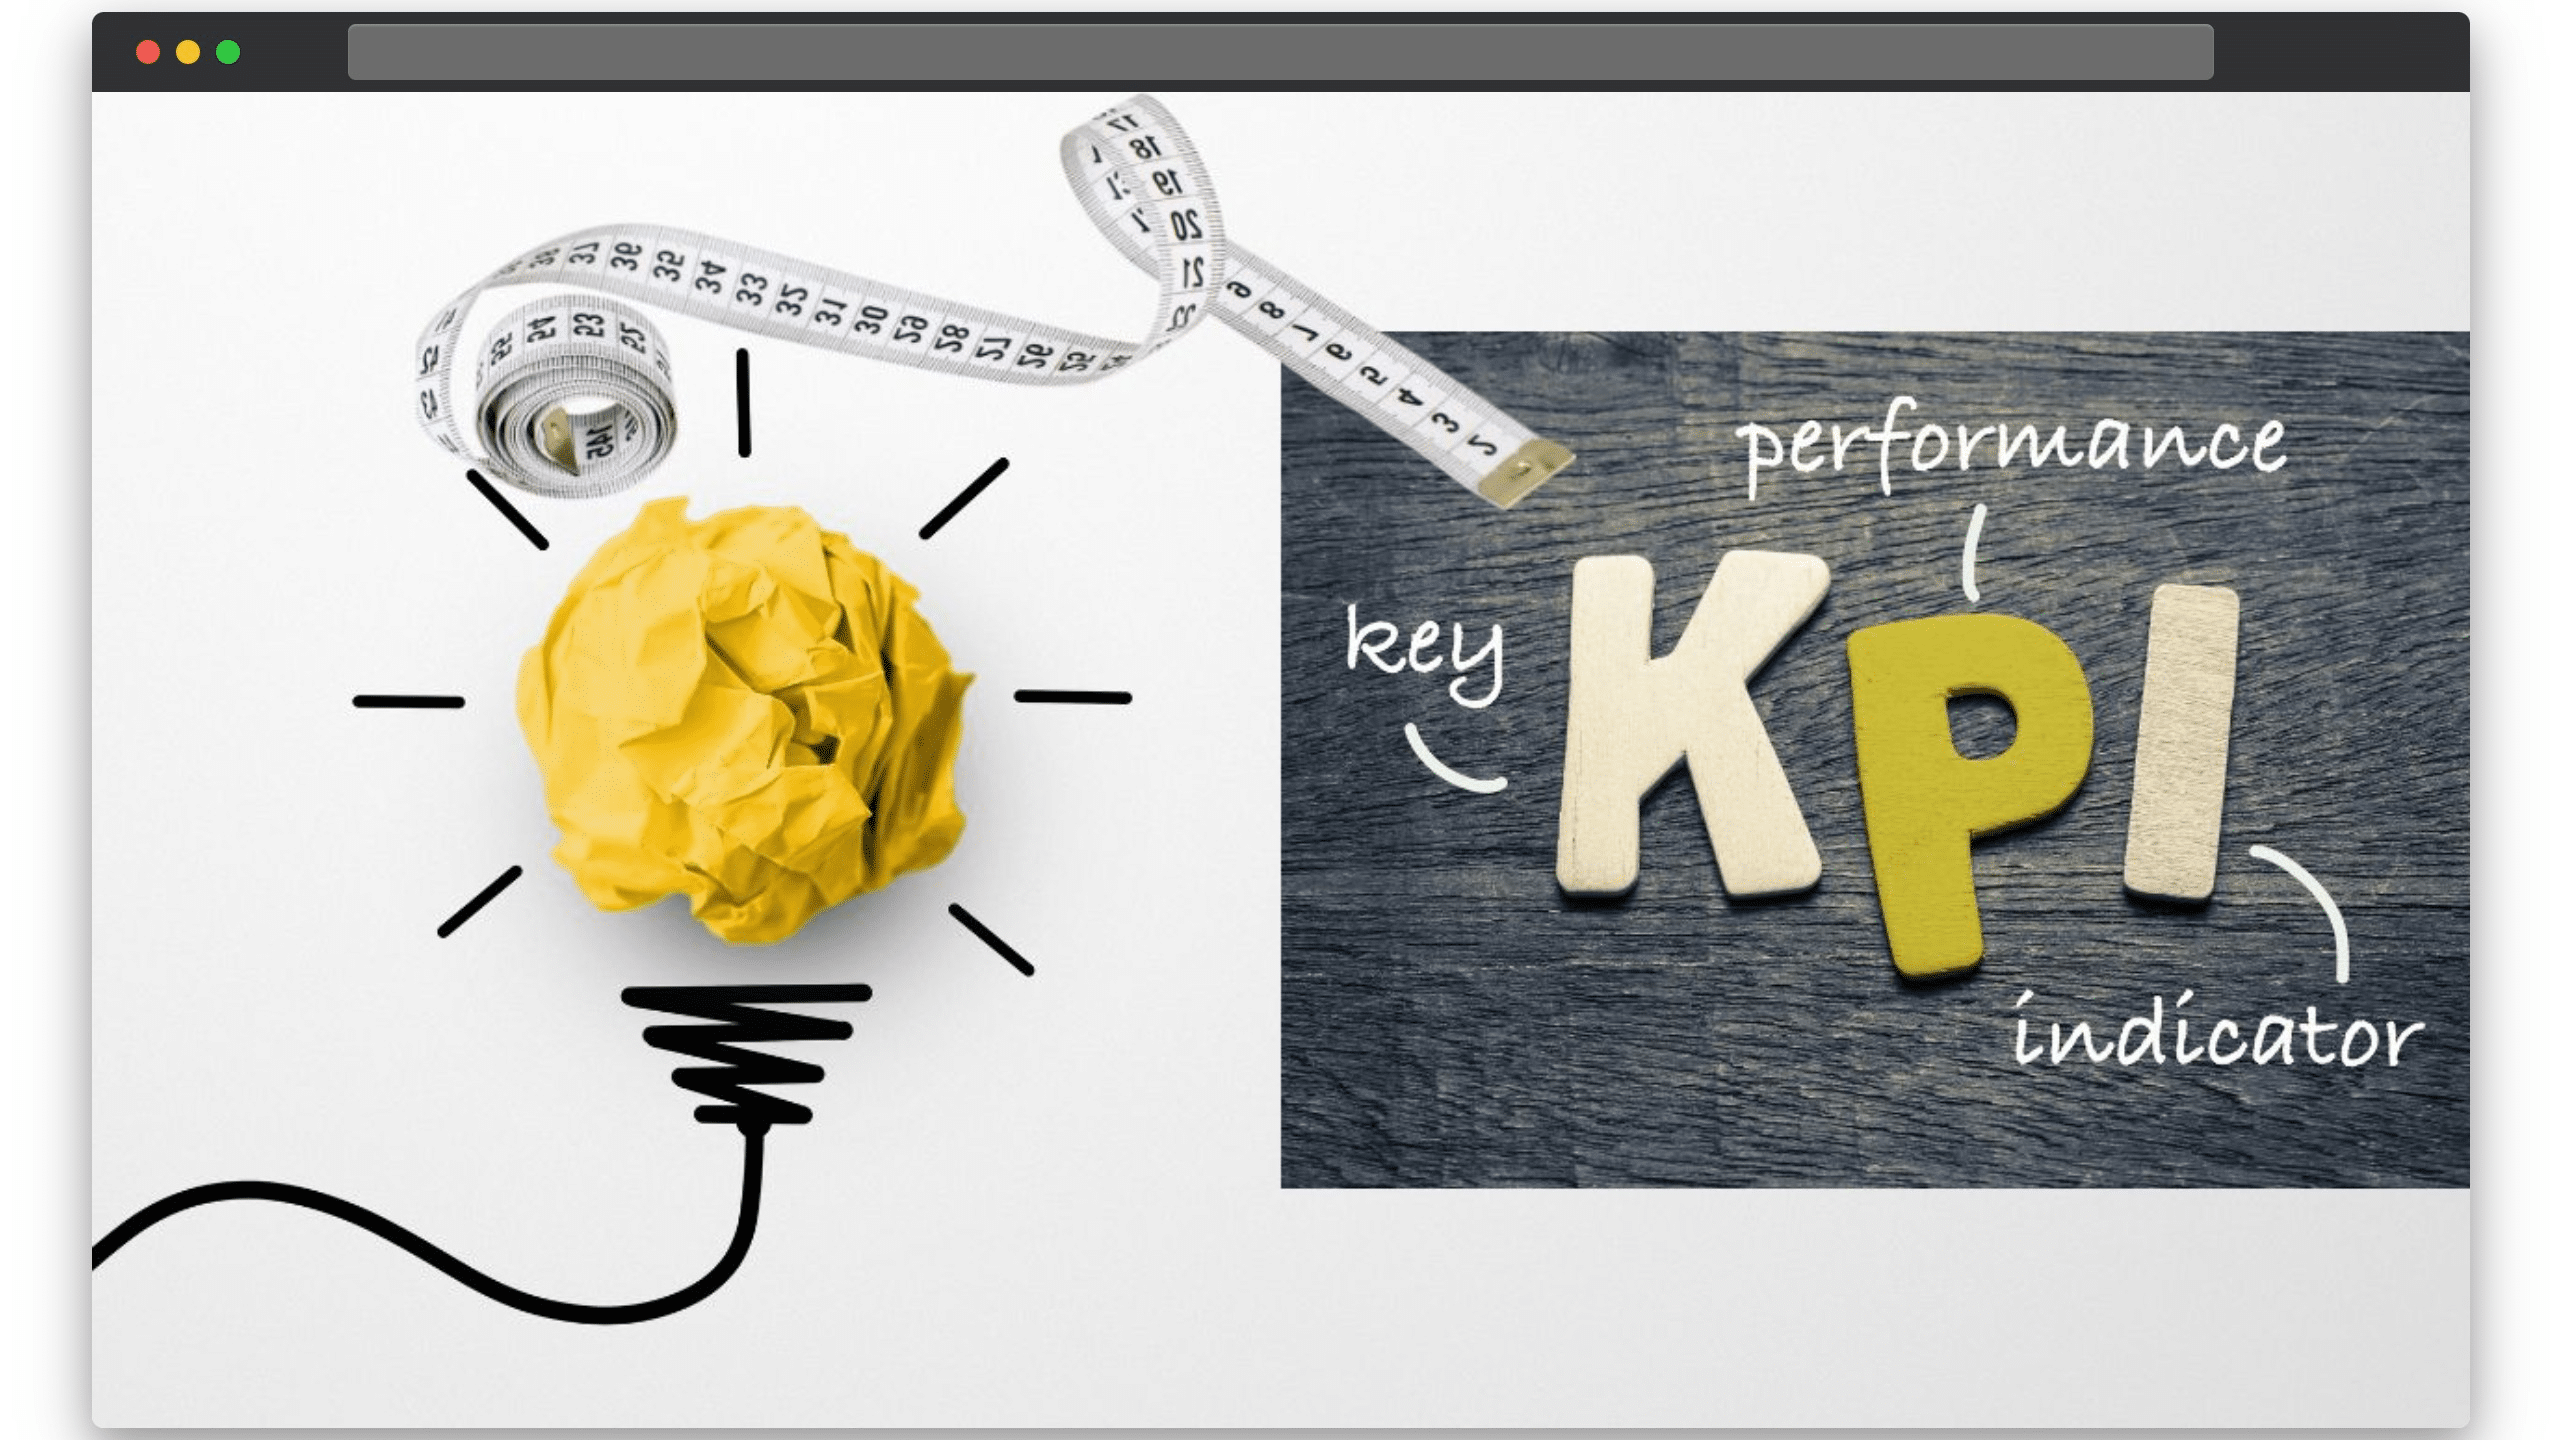 KPI, or key performance indicator, and a lightbulb